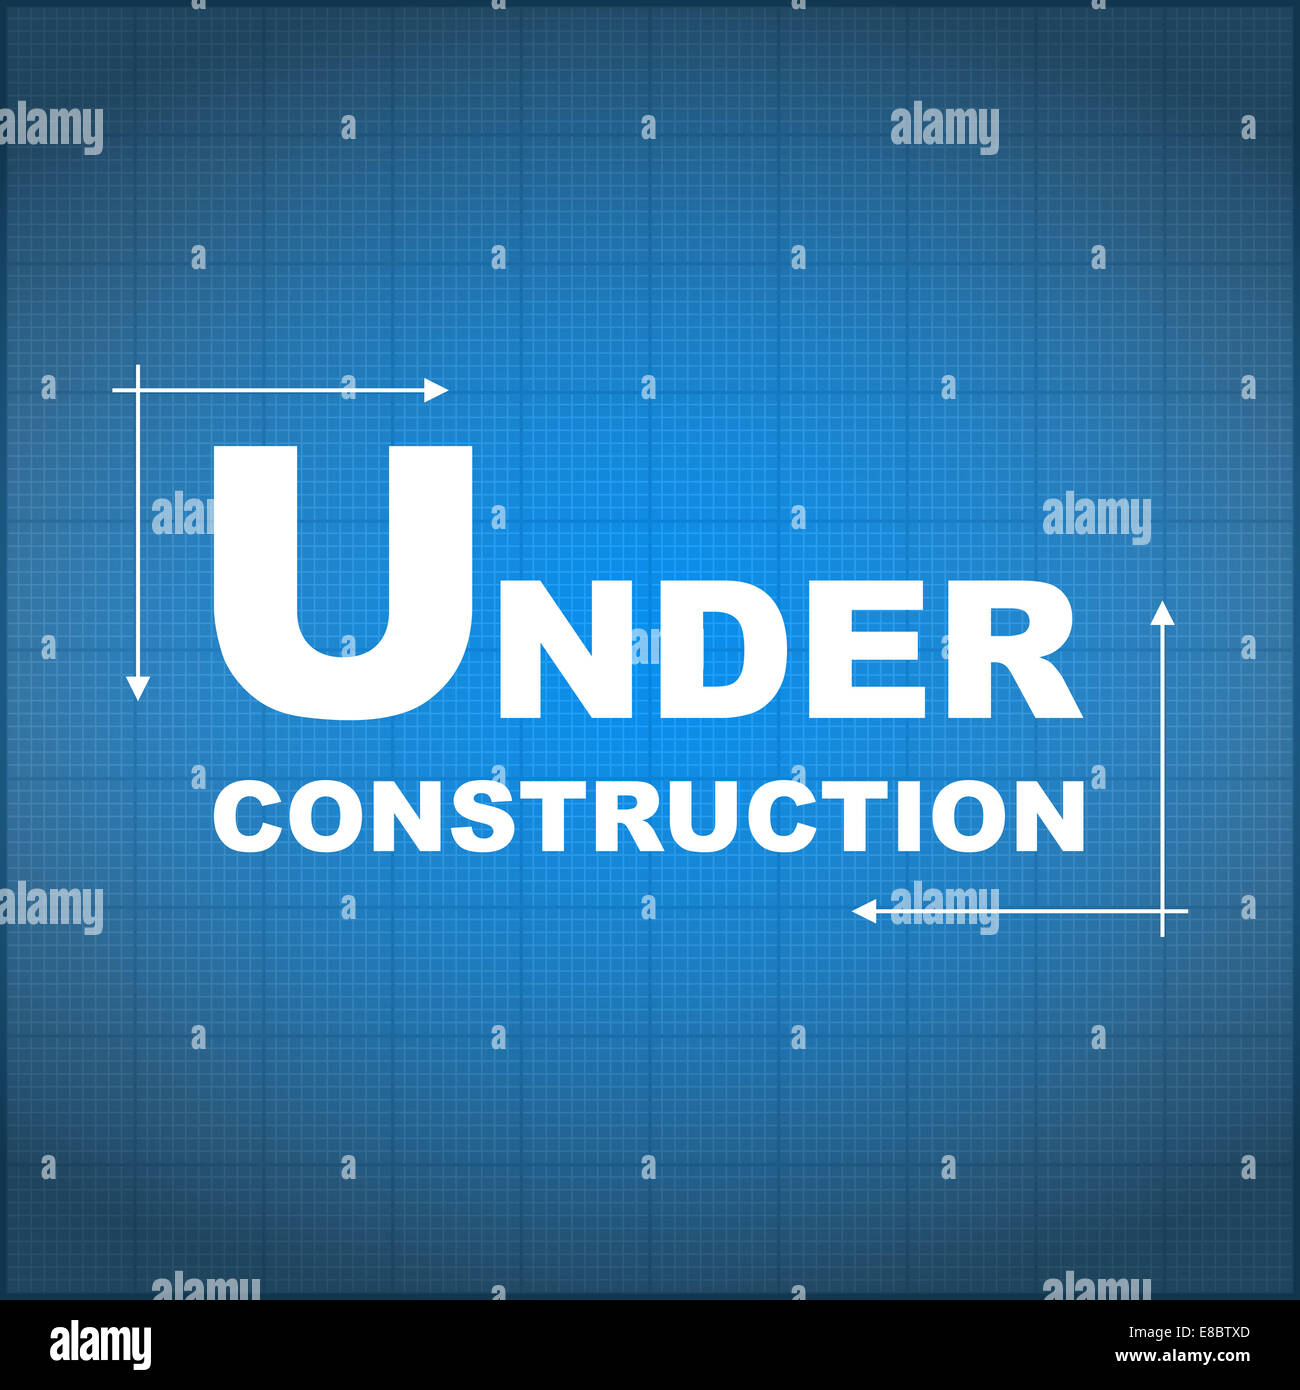 Under construction blueprint Stock Photo